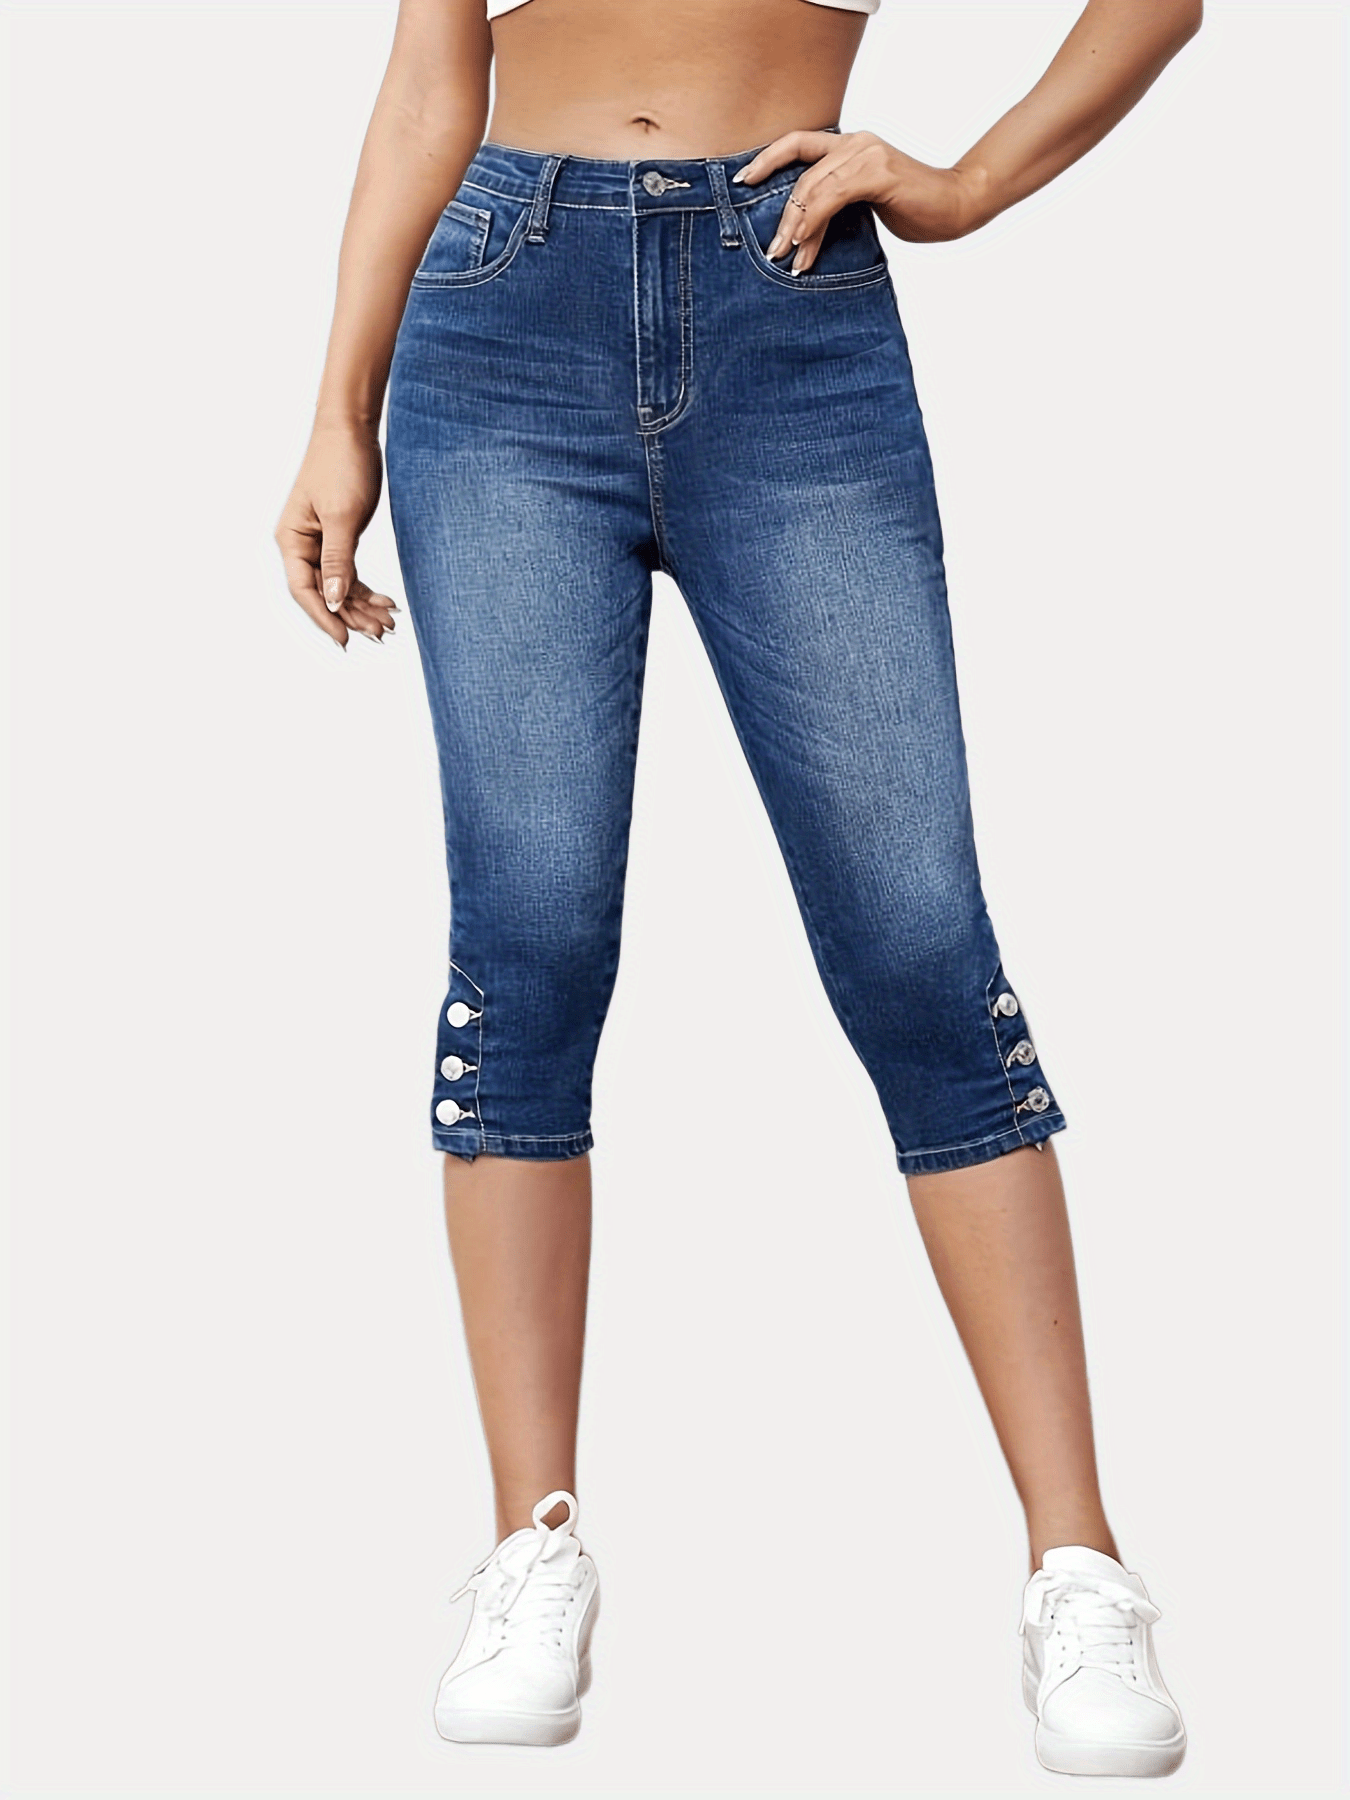 「lovevop」Blue Slim Fit Skinny Jeans, Slight-Stretch Slash Pockets Versatile High Waist Denim Pants, Women's Denim Jeans & Clothing